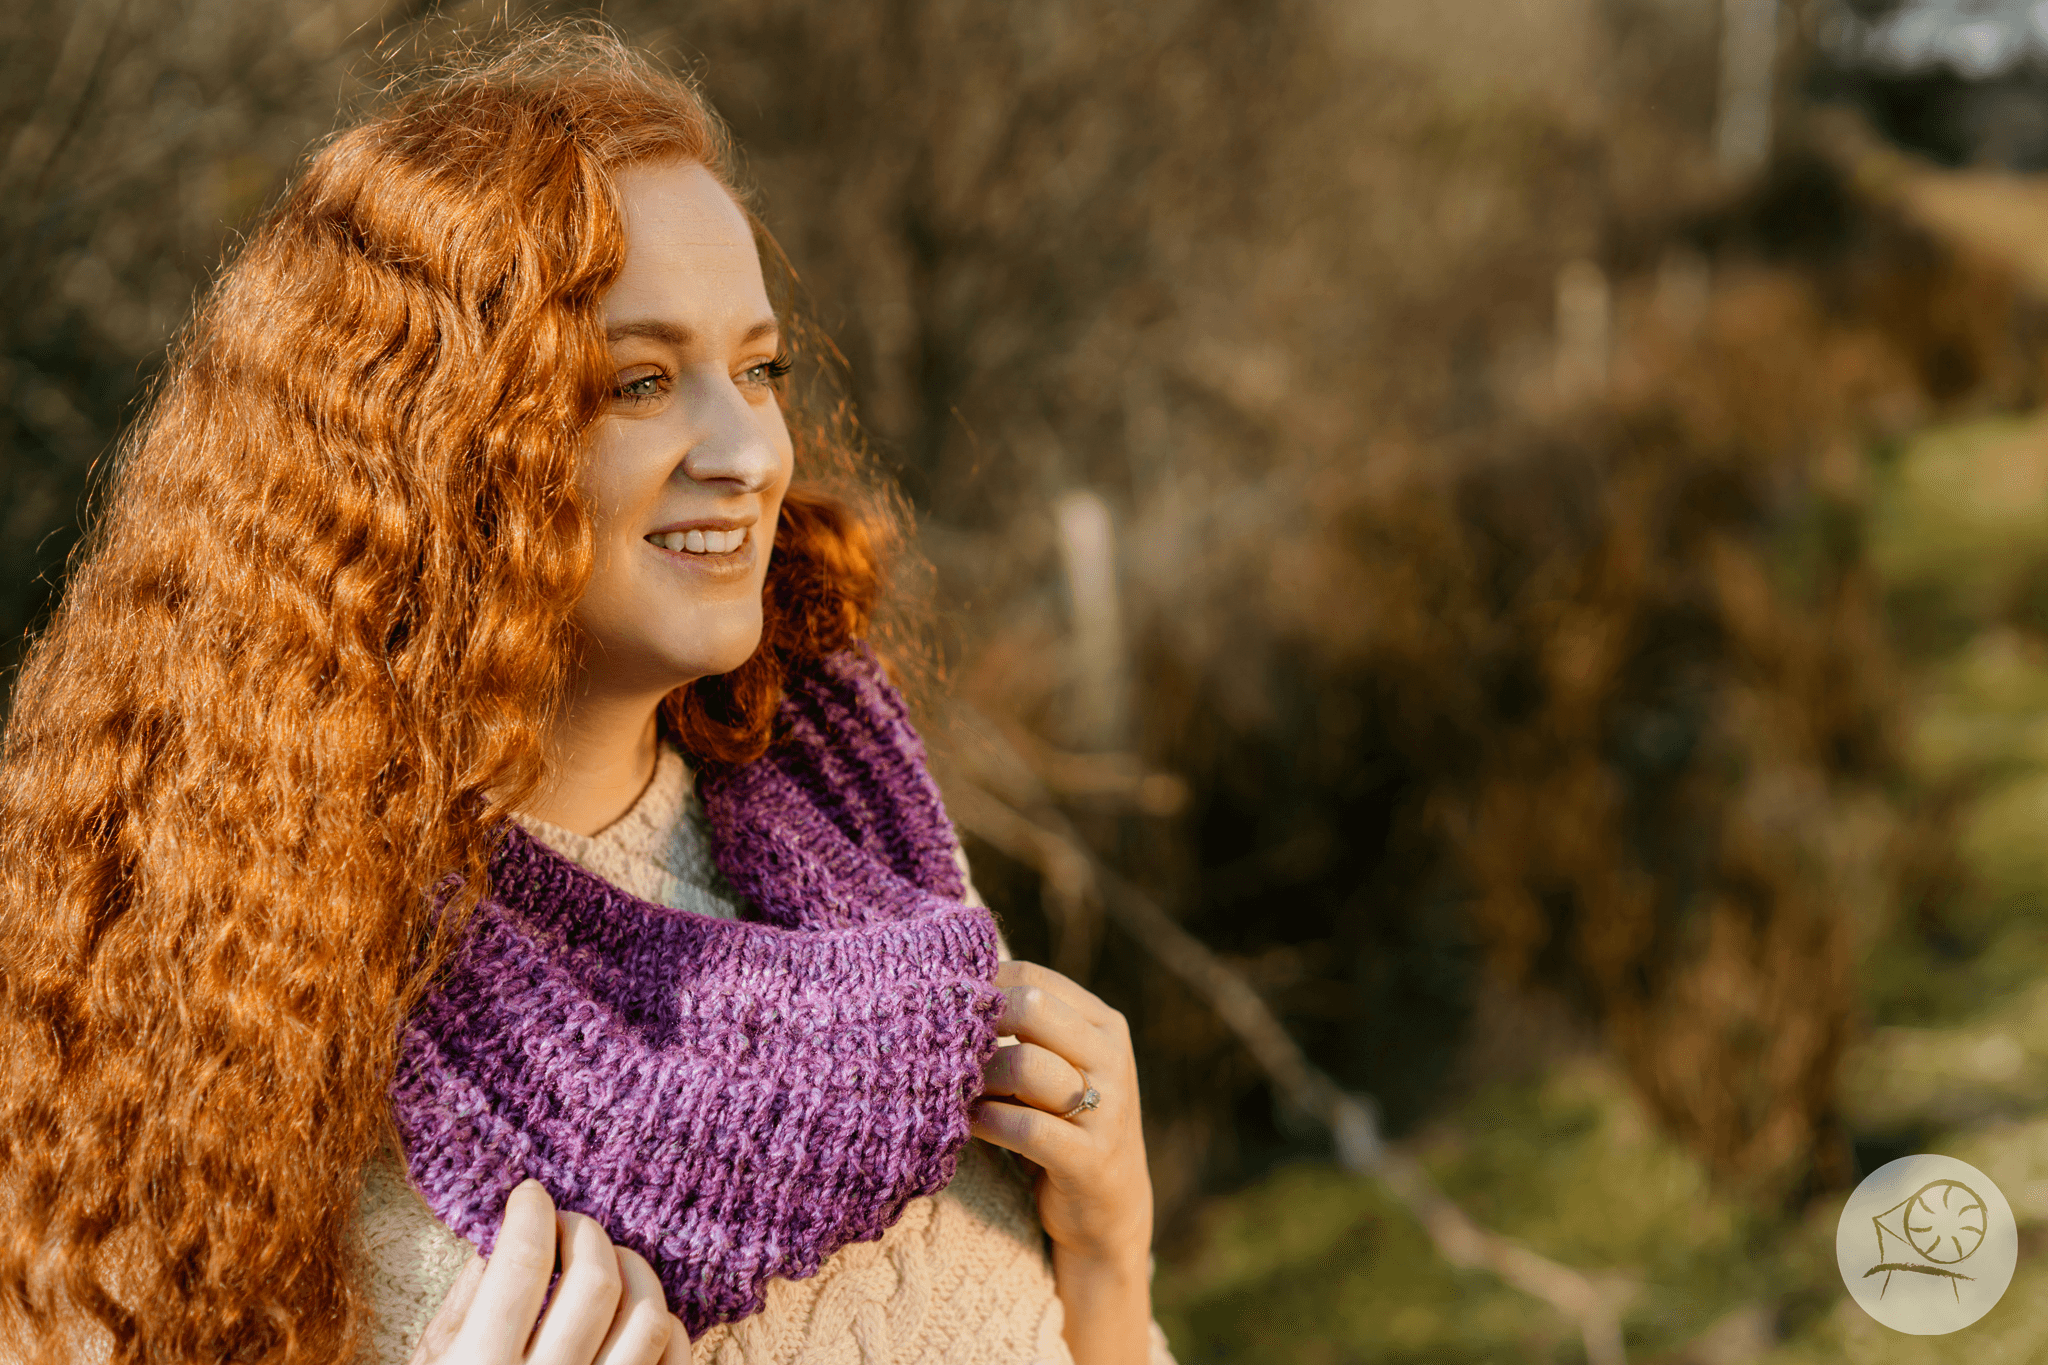 Connemara Hand Knitted Snood